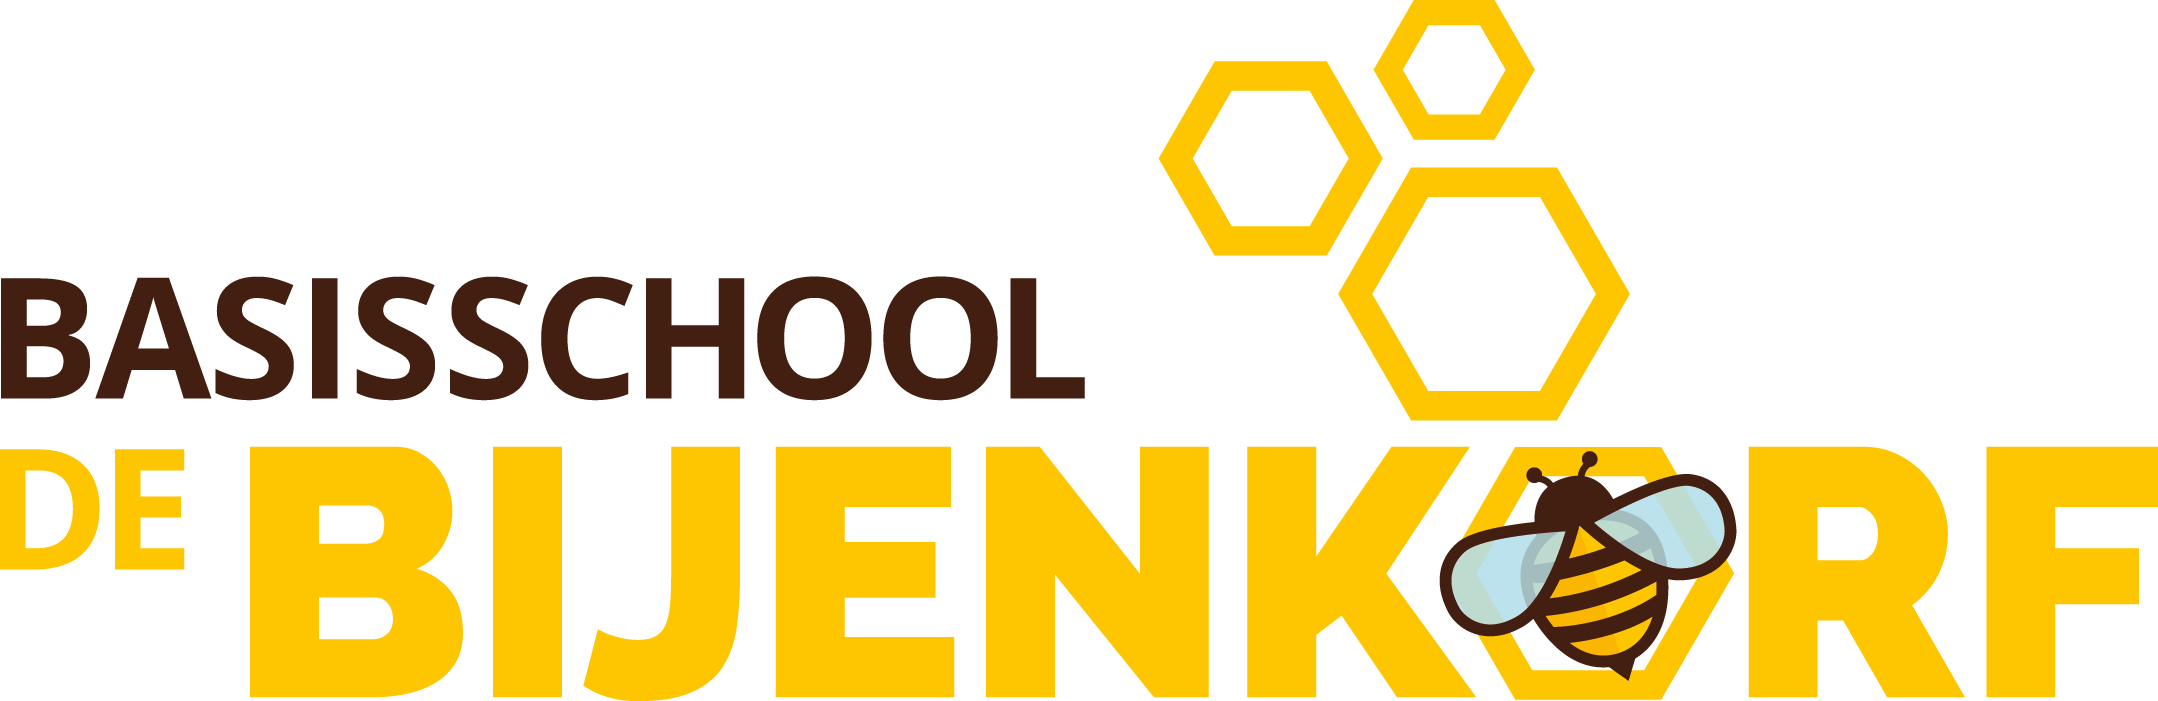 basisschooldebijenkorf-logo-transparant.png